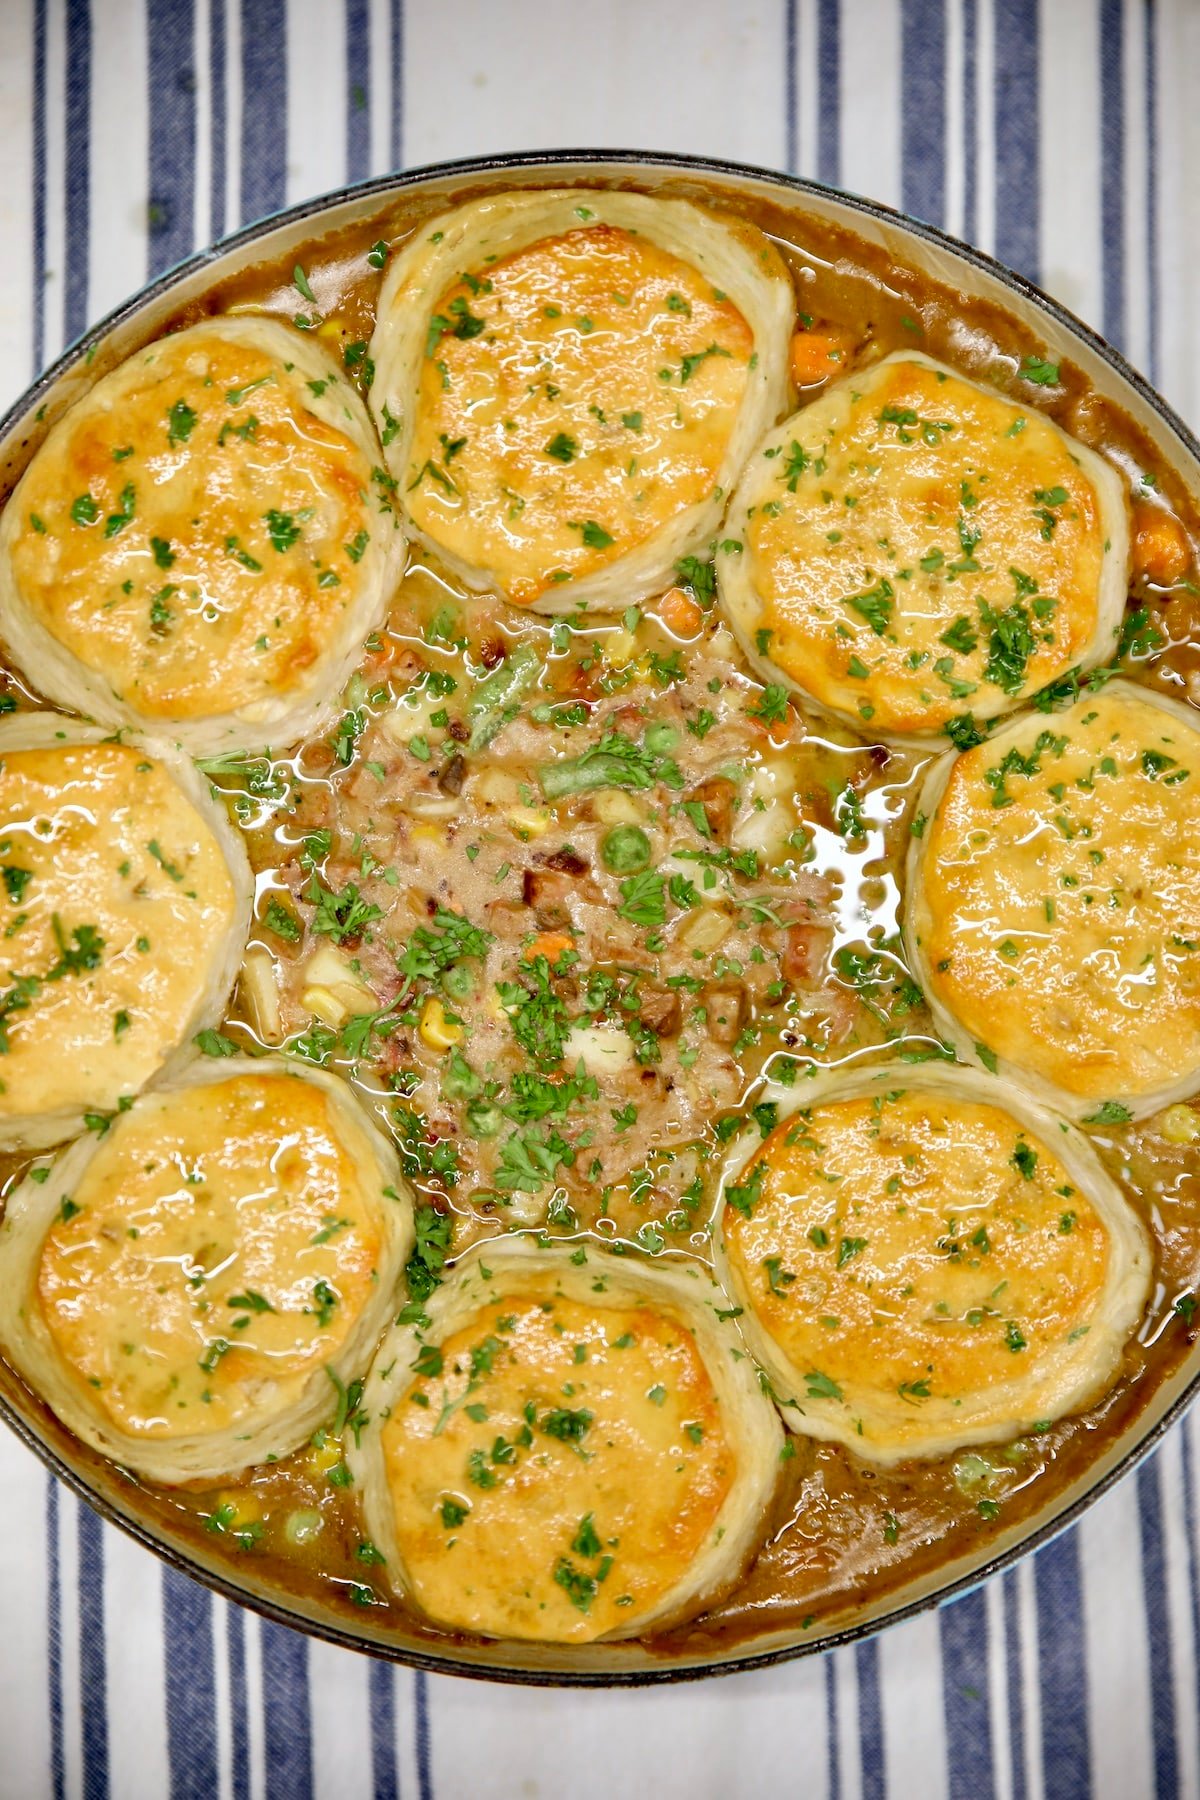 Pan of beef pot pie with garlic biscuits.